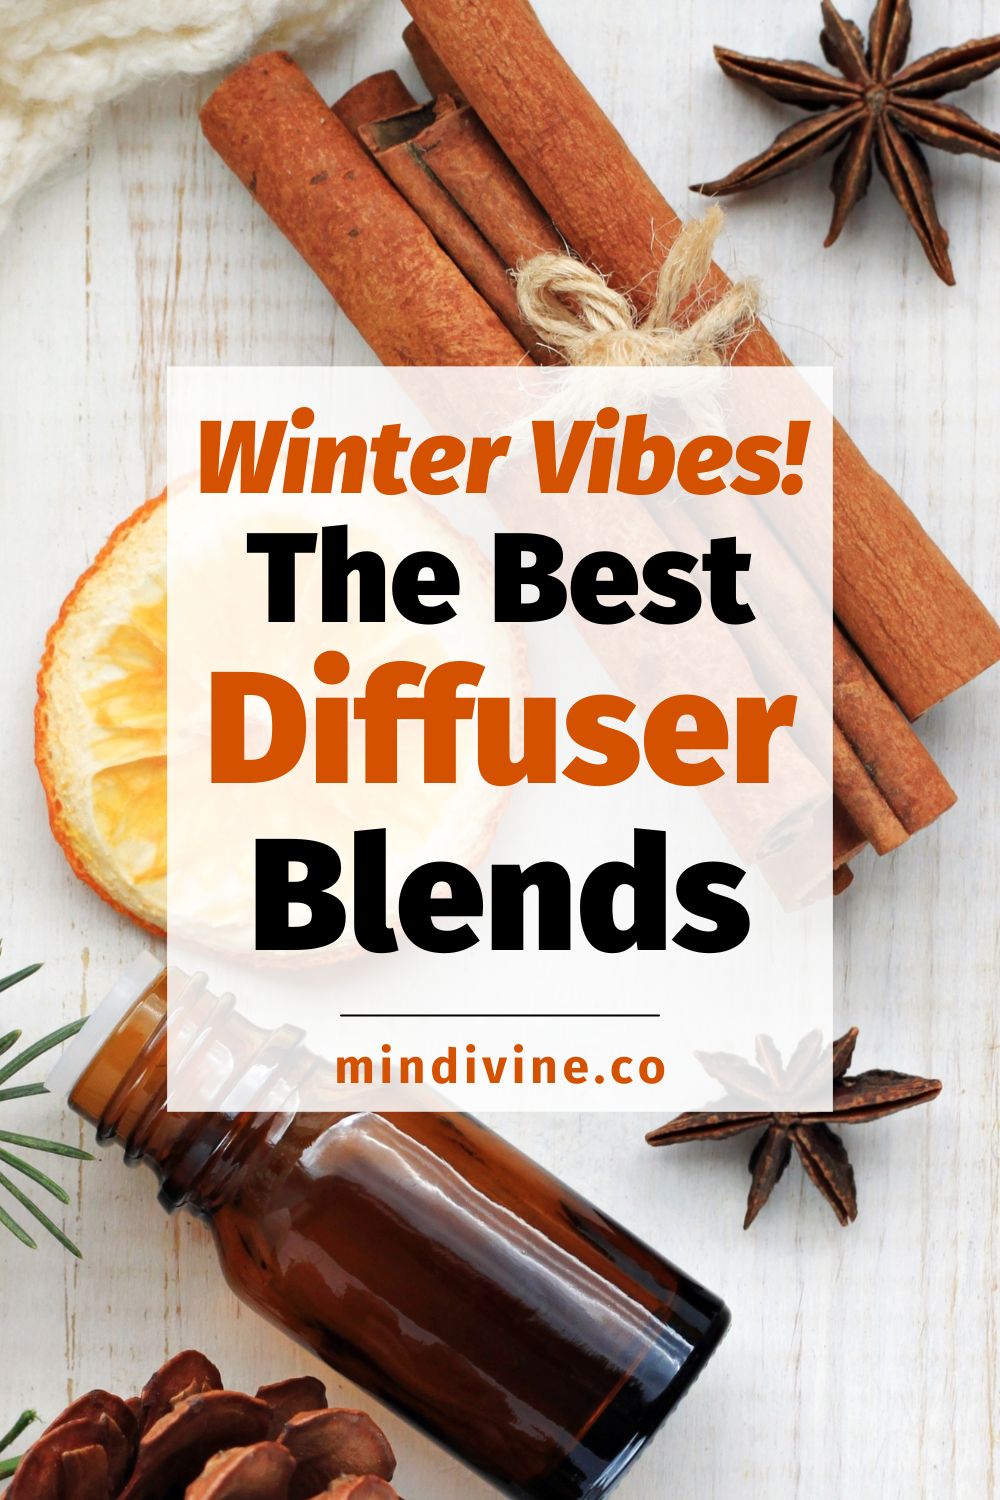 Essential oils, orange, cinnamon sticks, anise, fir, cones, wooden blanket, top view.